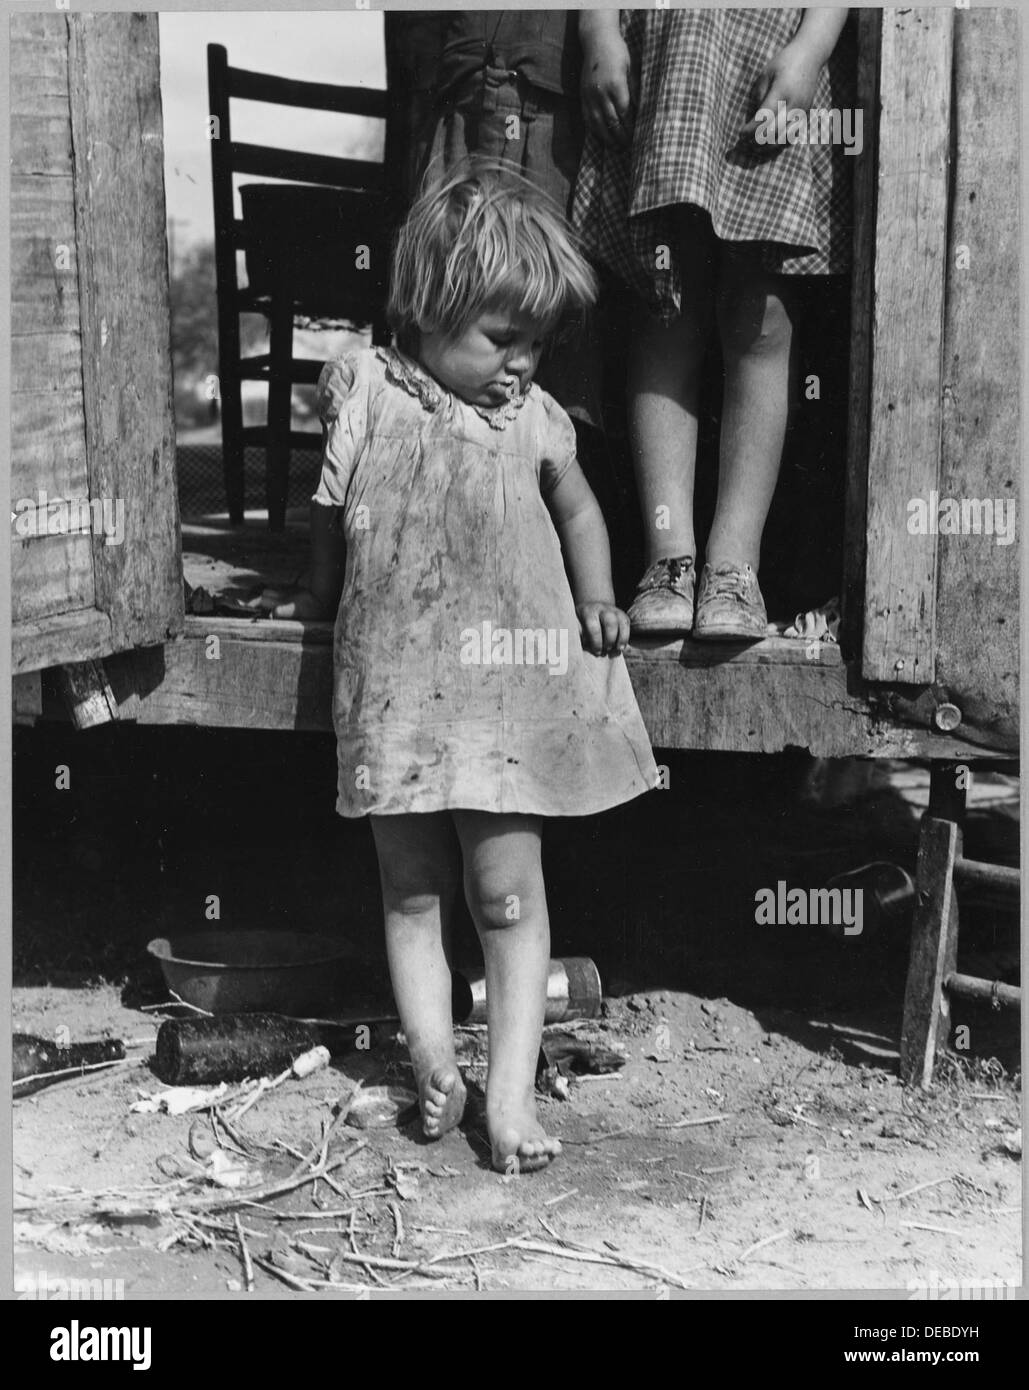 On Arizona Highway 87, south of Chandler. Maricopa County, Arizona. Children in a democracy. A migra . . . 5204 Stock Photo